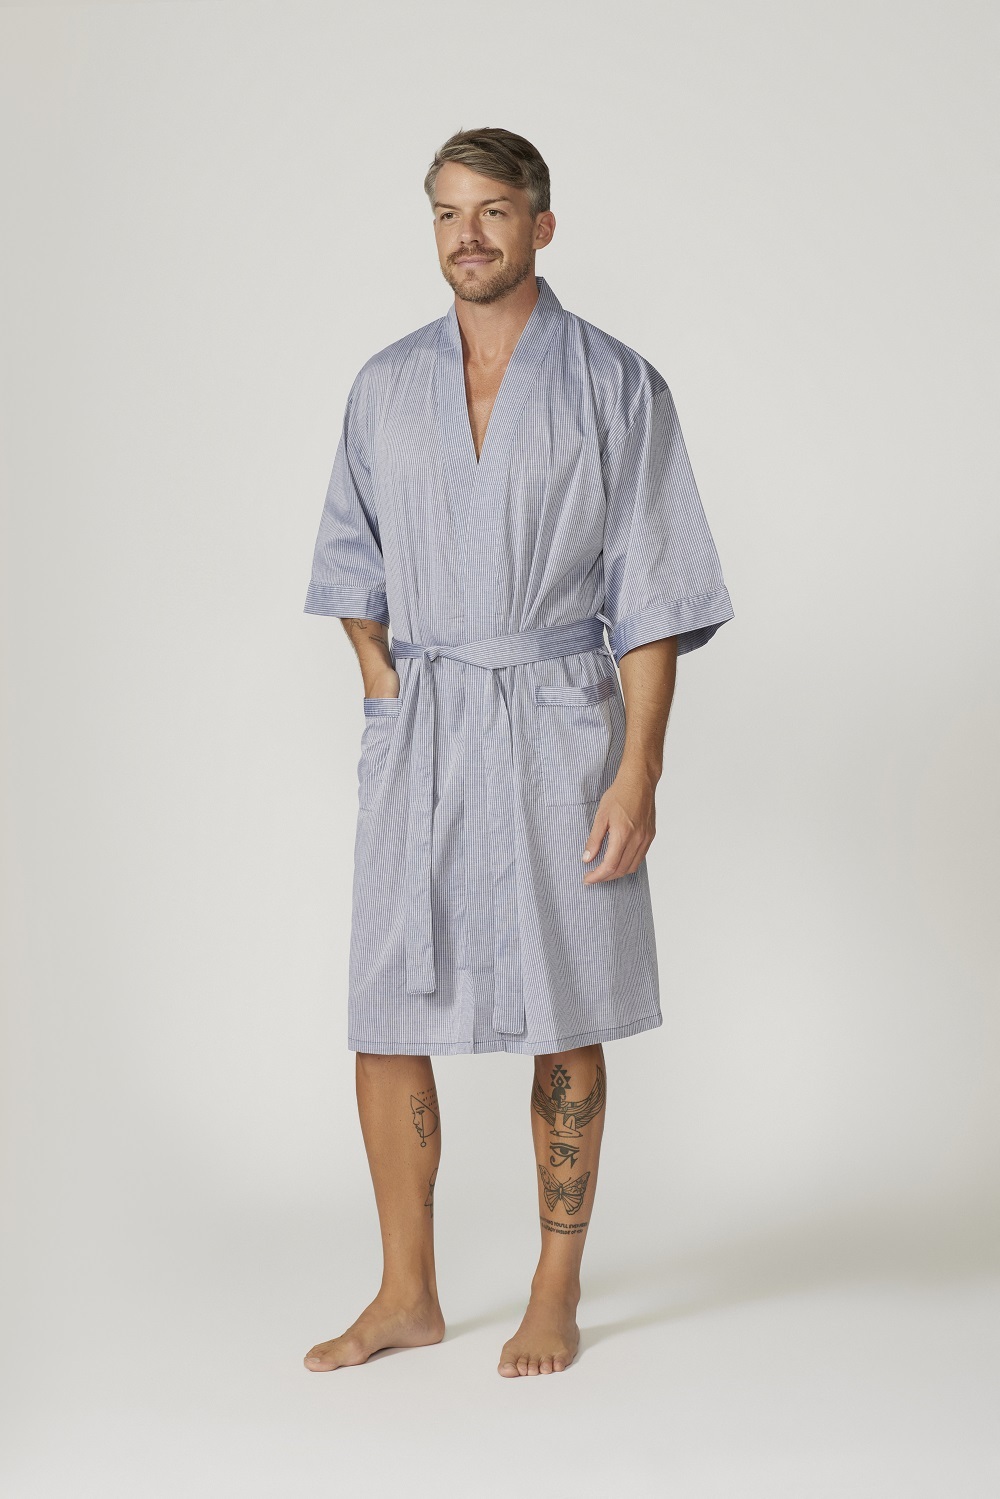 John Christian Men's Lightweight Brushed Cotton Dressing Gown, Navy Stripe  (M) : Amazon.co.uk: Fashion